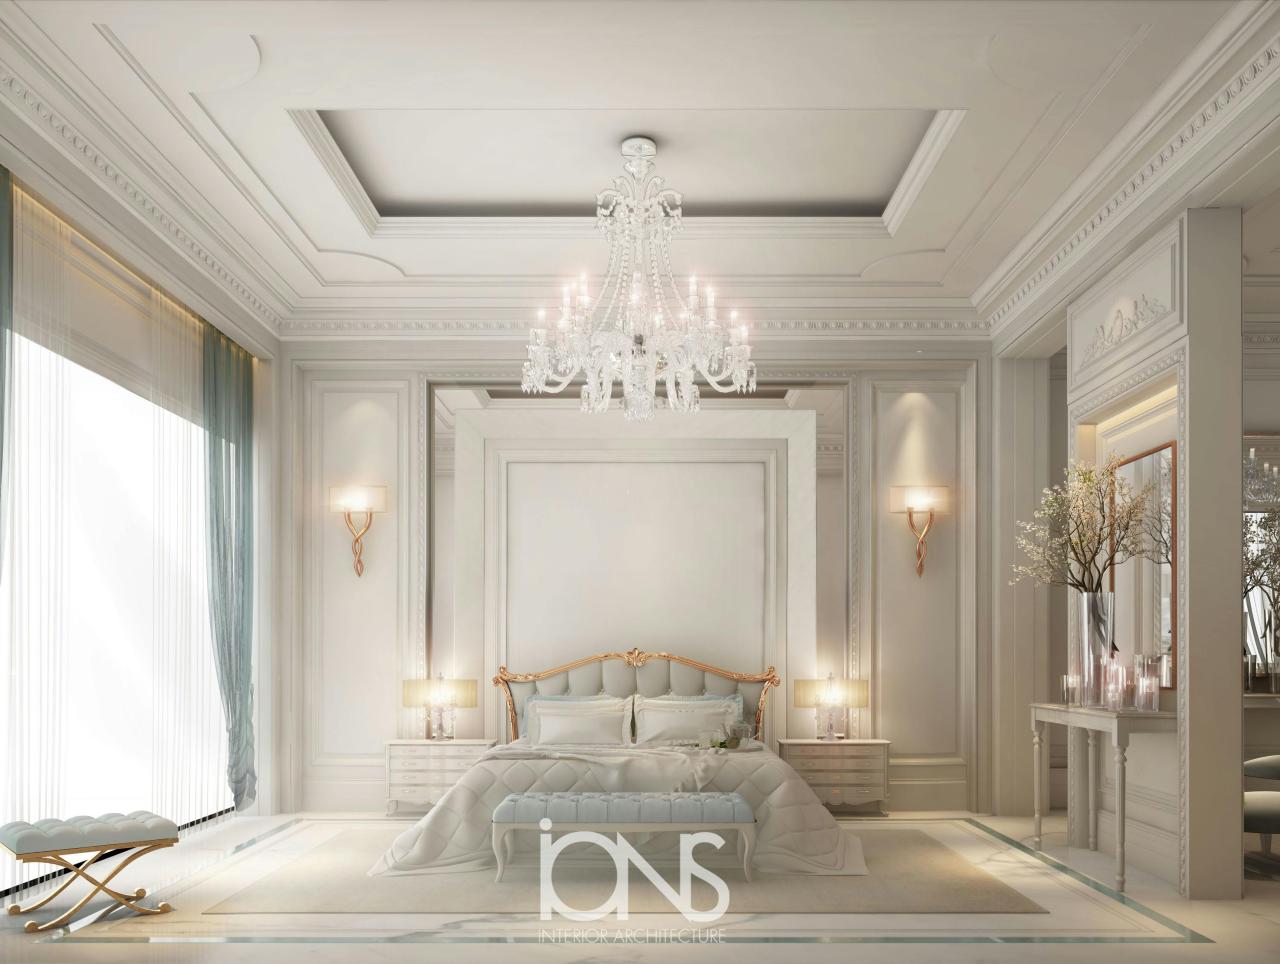 Elegant and Timeless Bedroom Designs